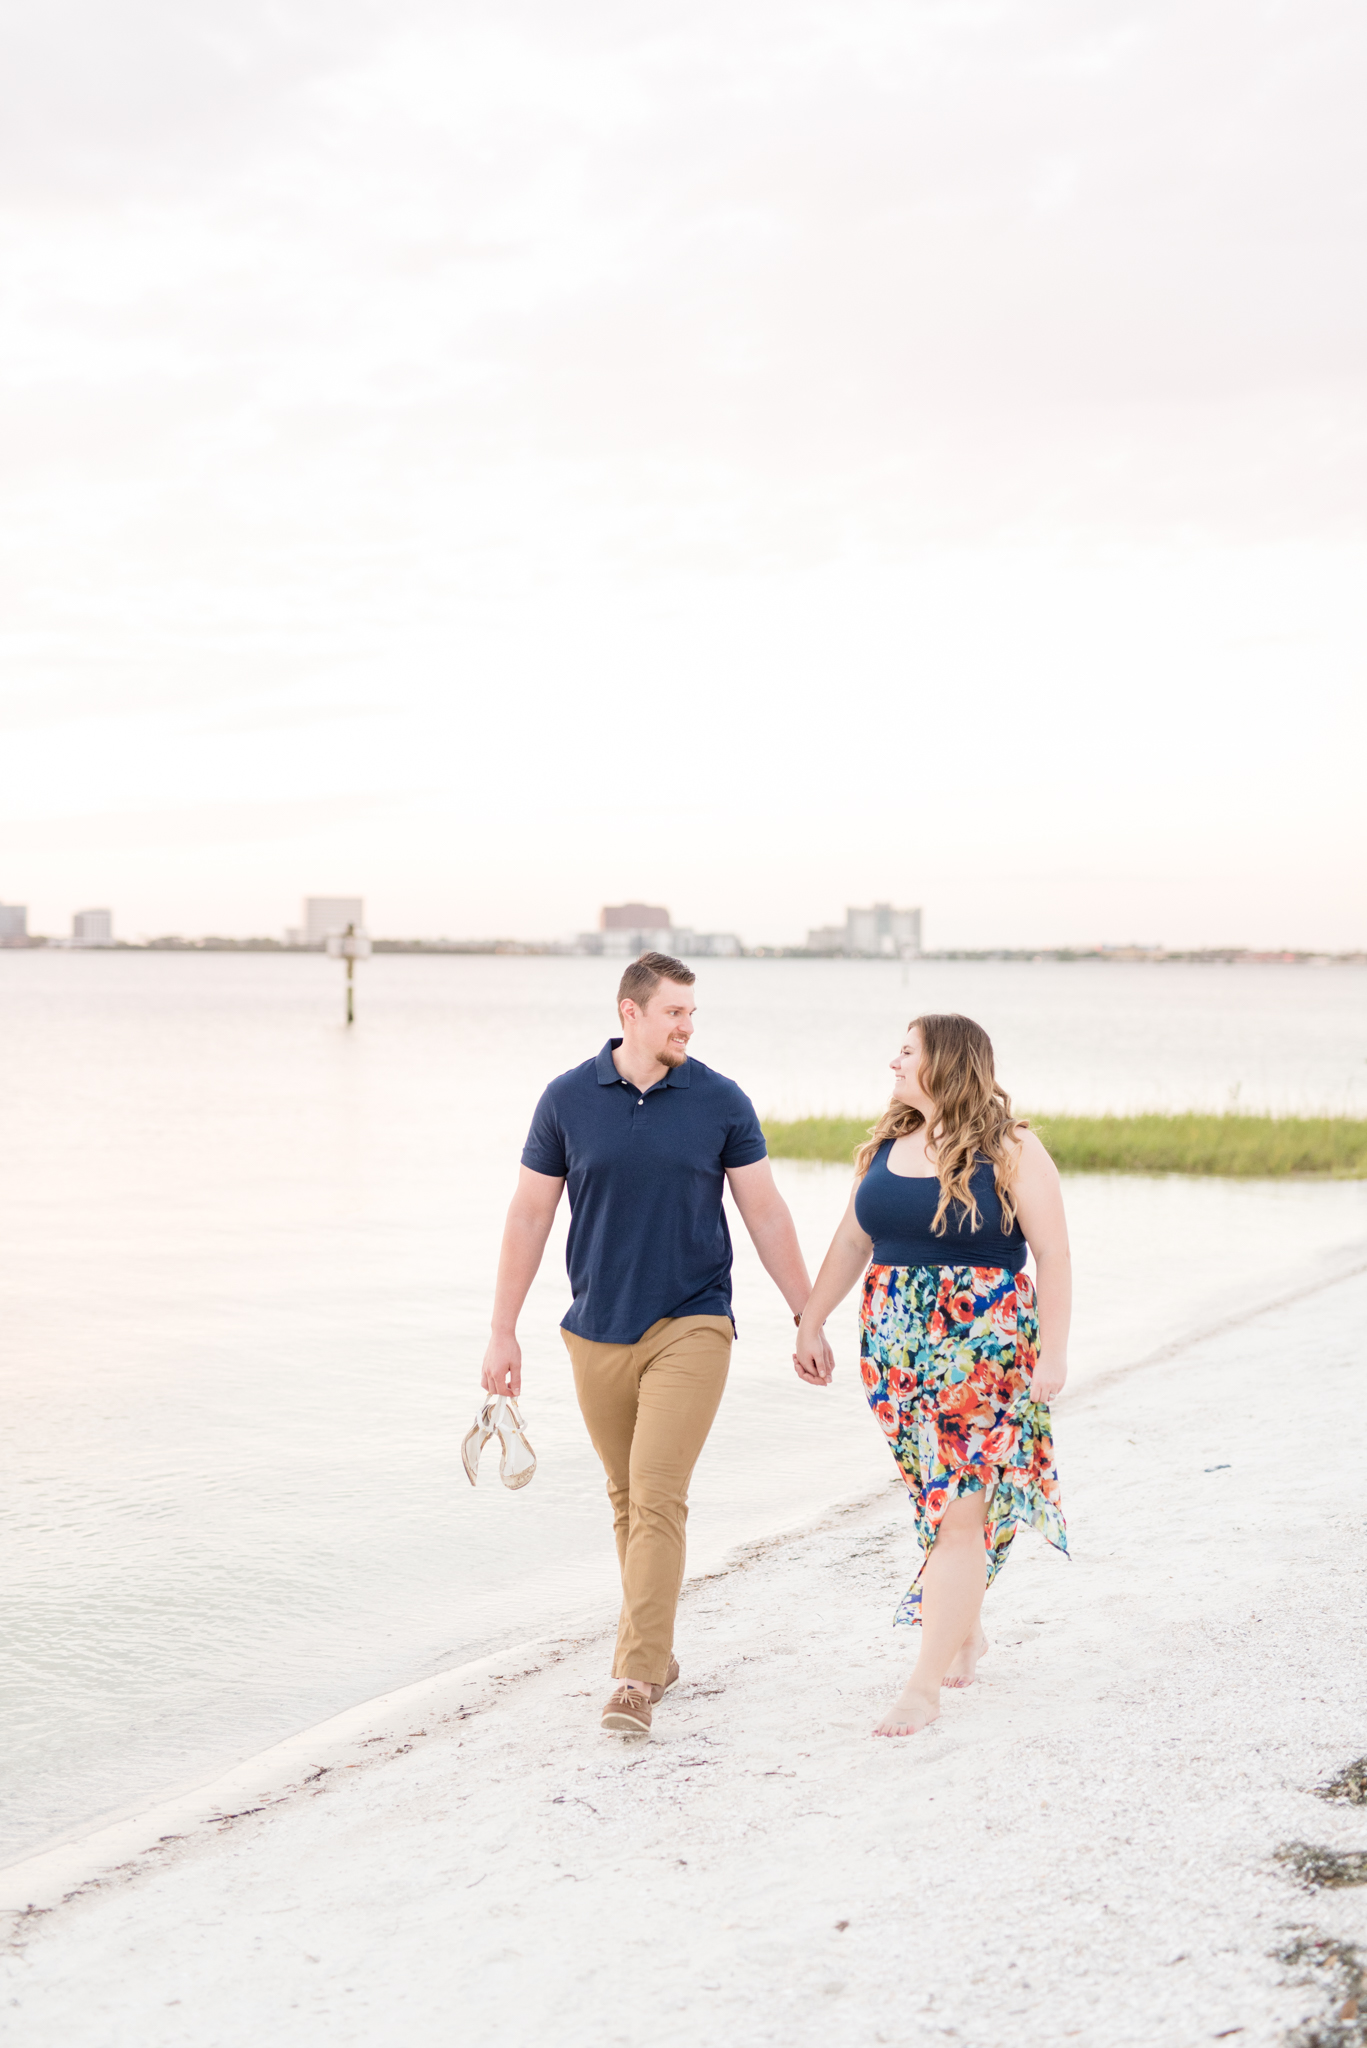 Couples walks hand in hand on beach.